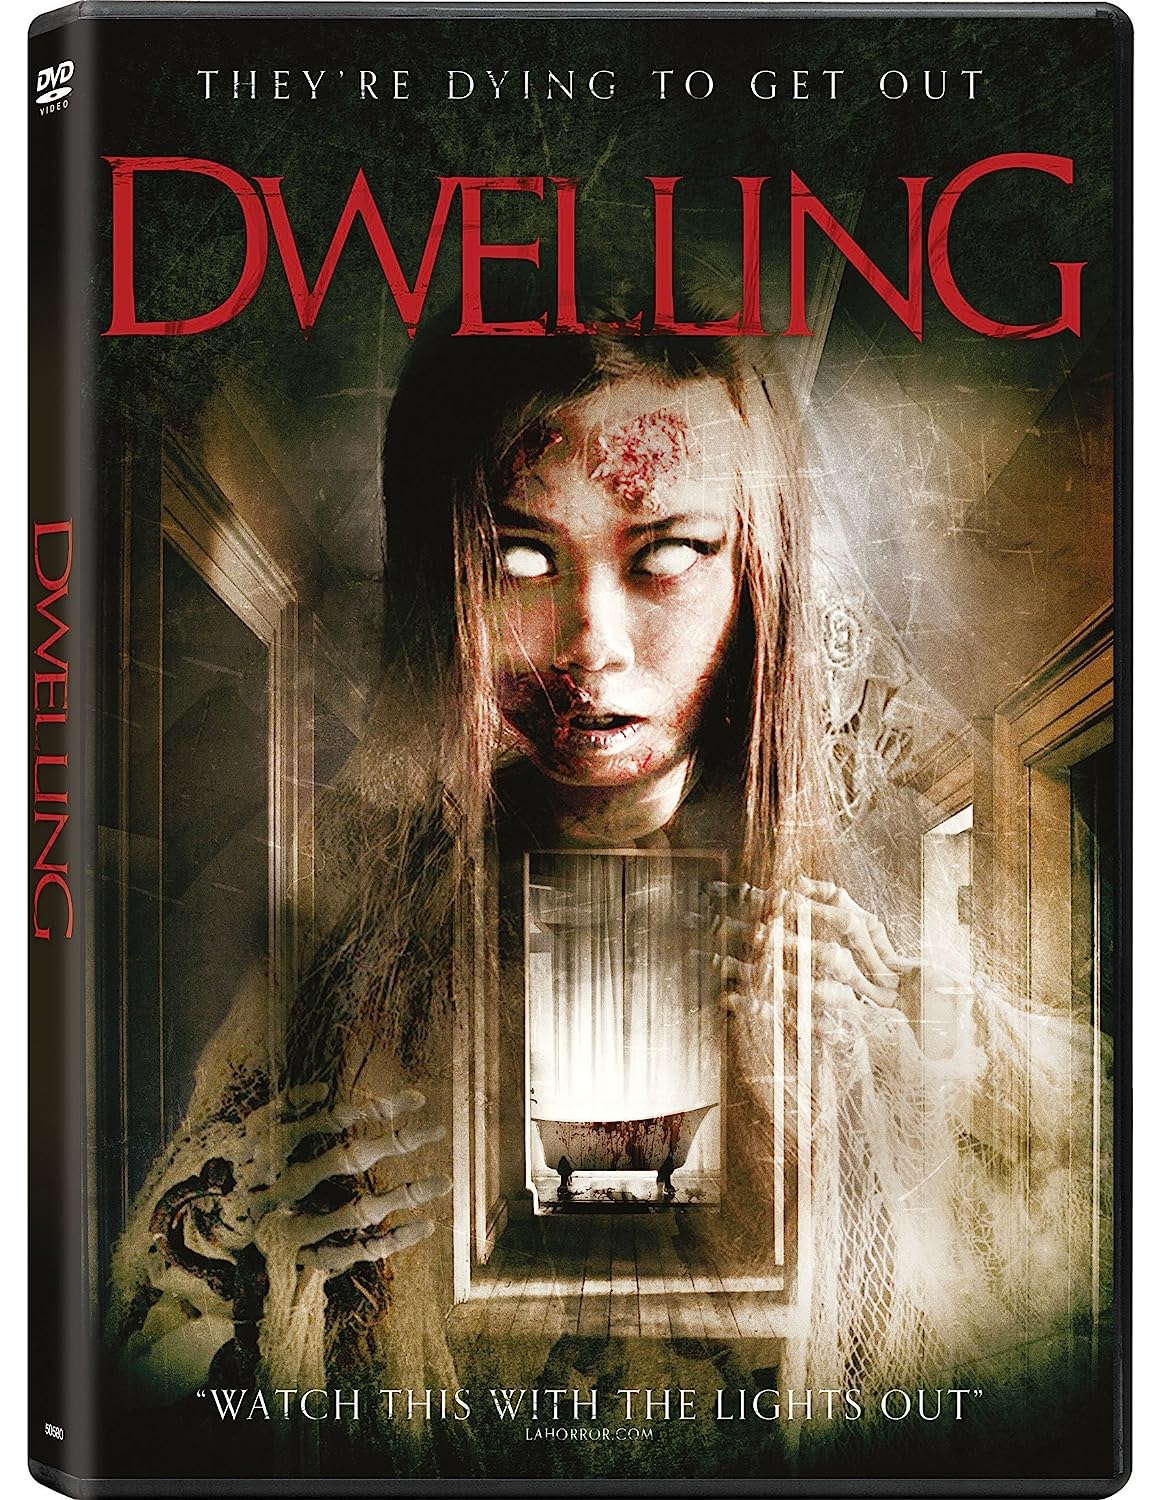 Dwelliing - Darkside Records